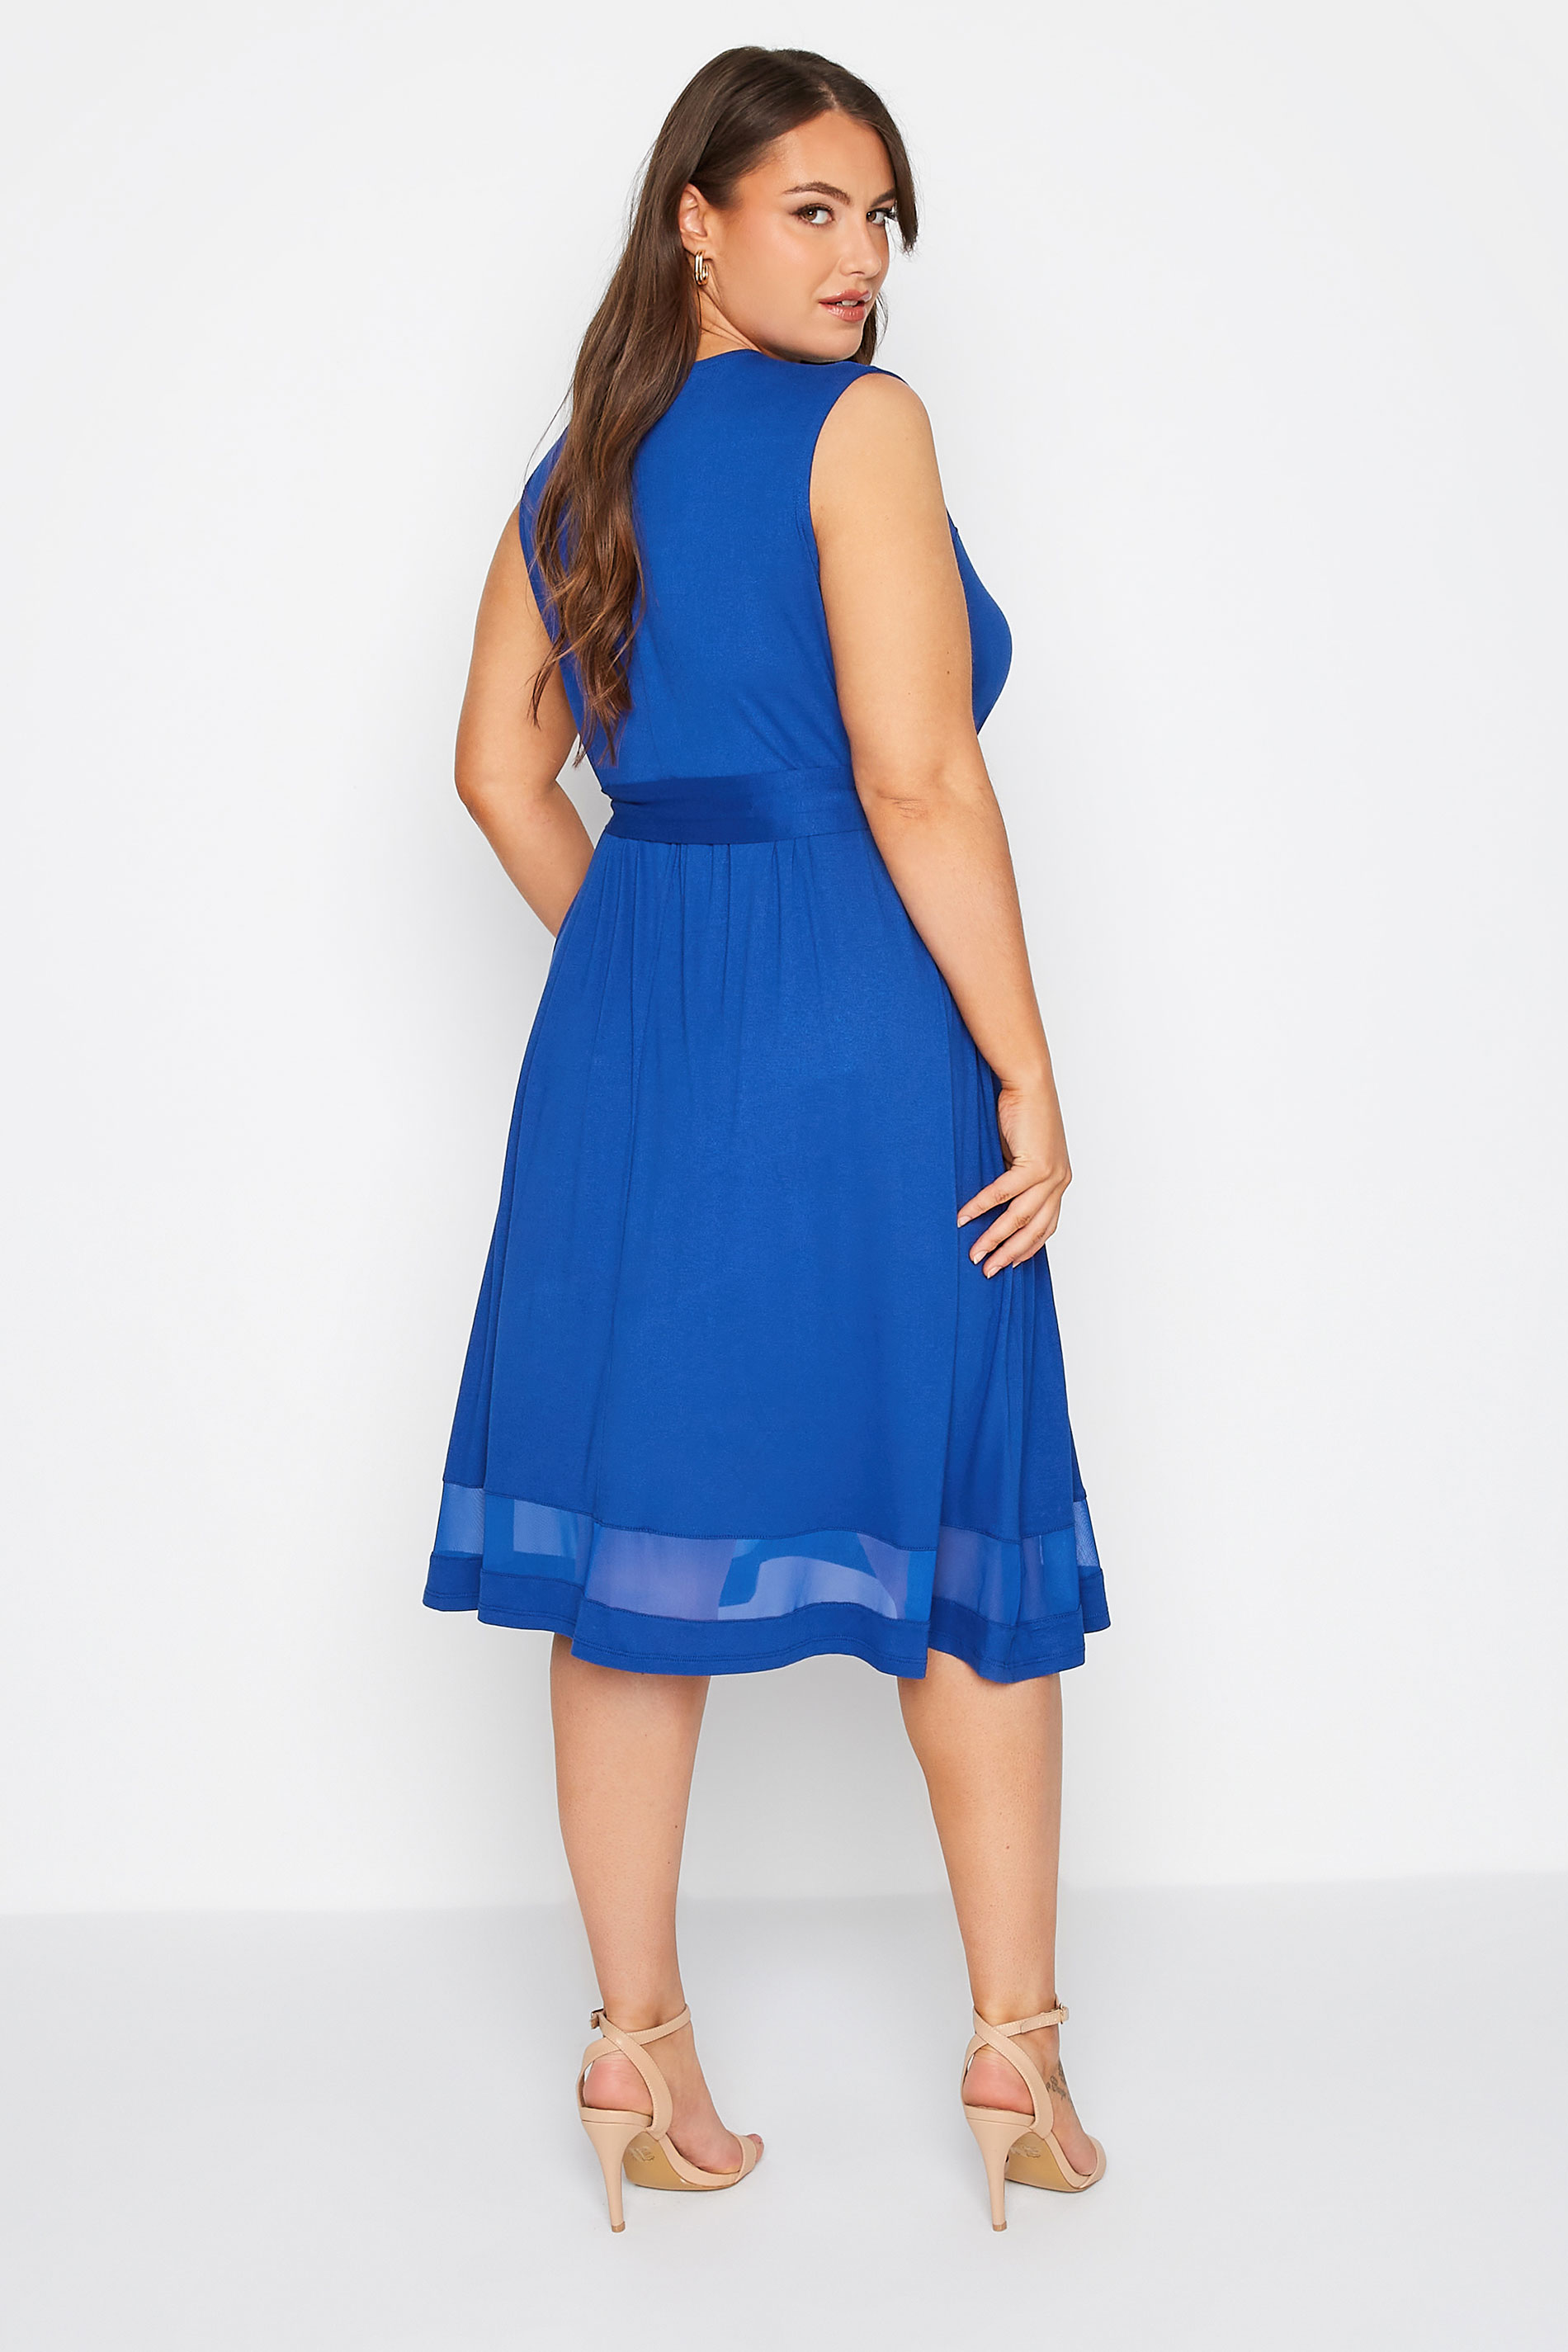 Plus Size Cobalt Blue Mesh Panel Skater Dress | Yours Clothing